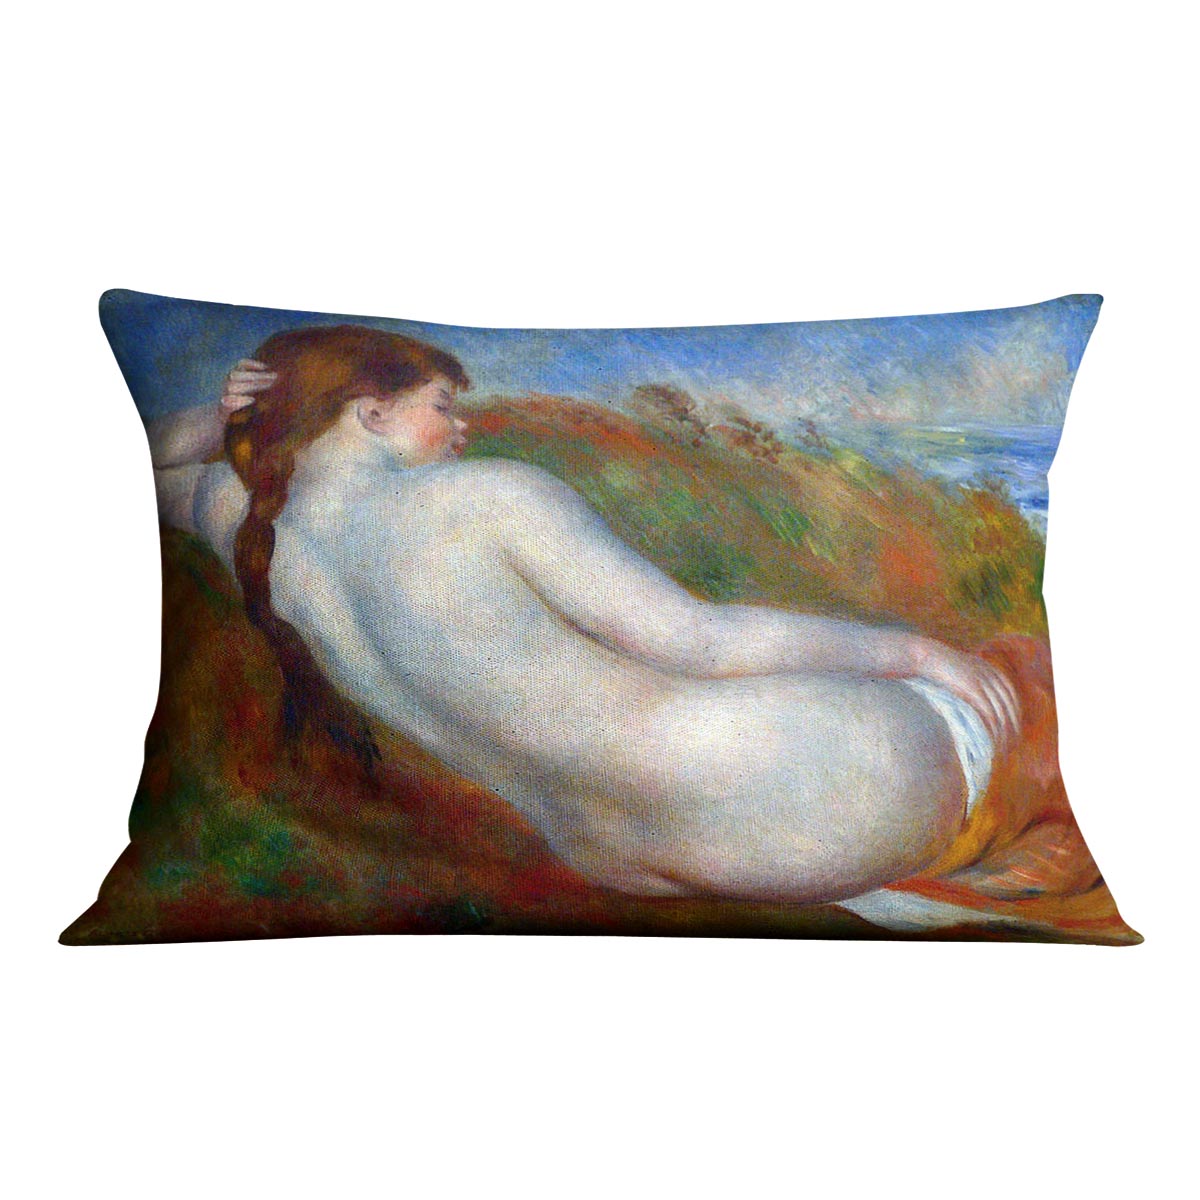 Reclining nude by Renoir Cushion